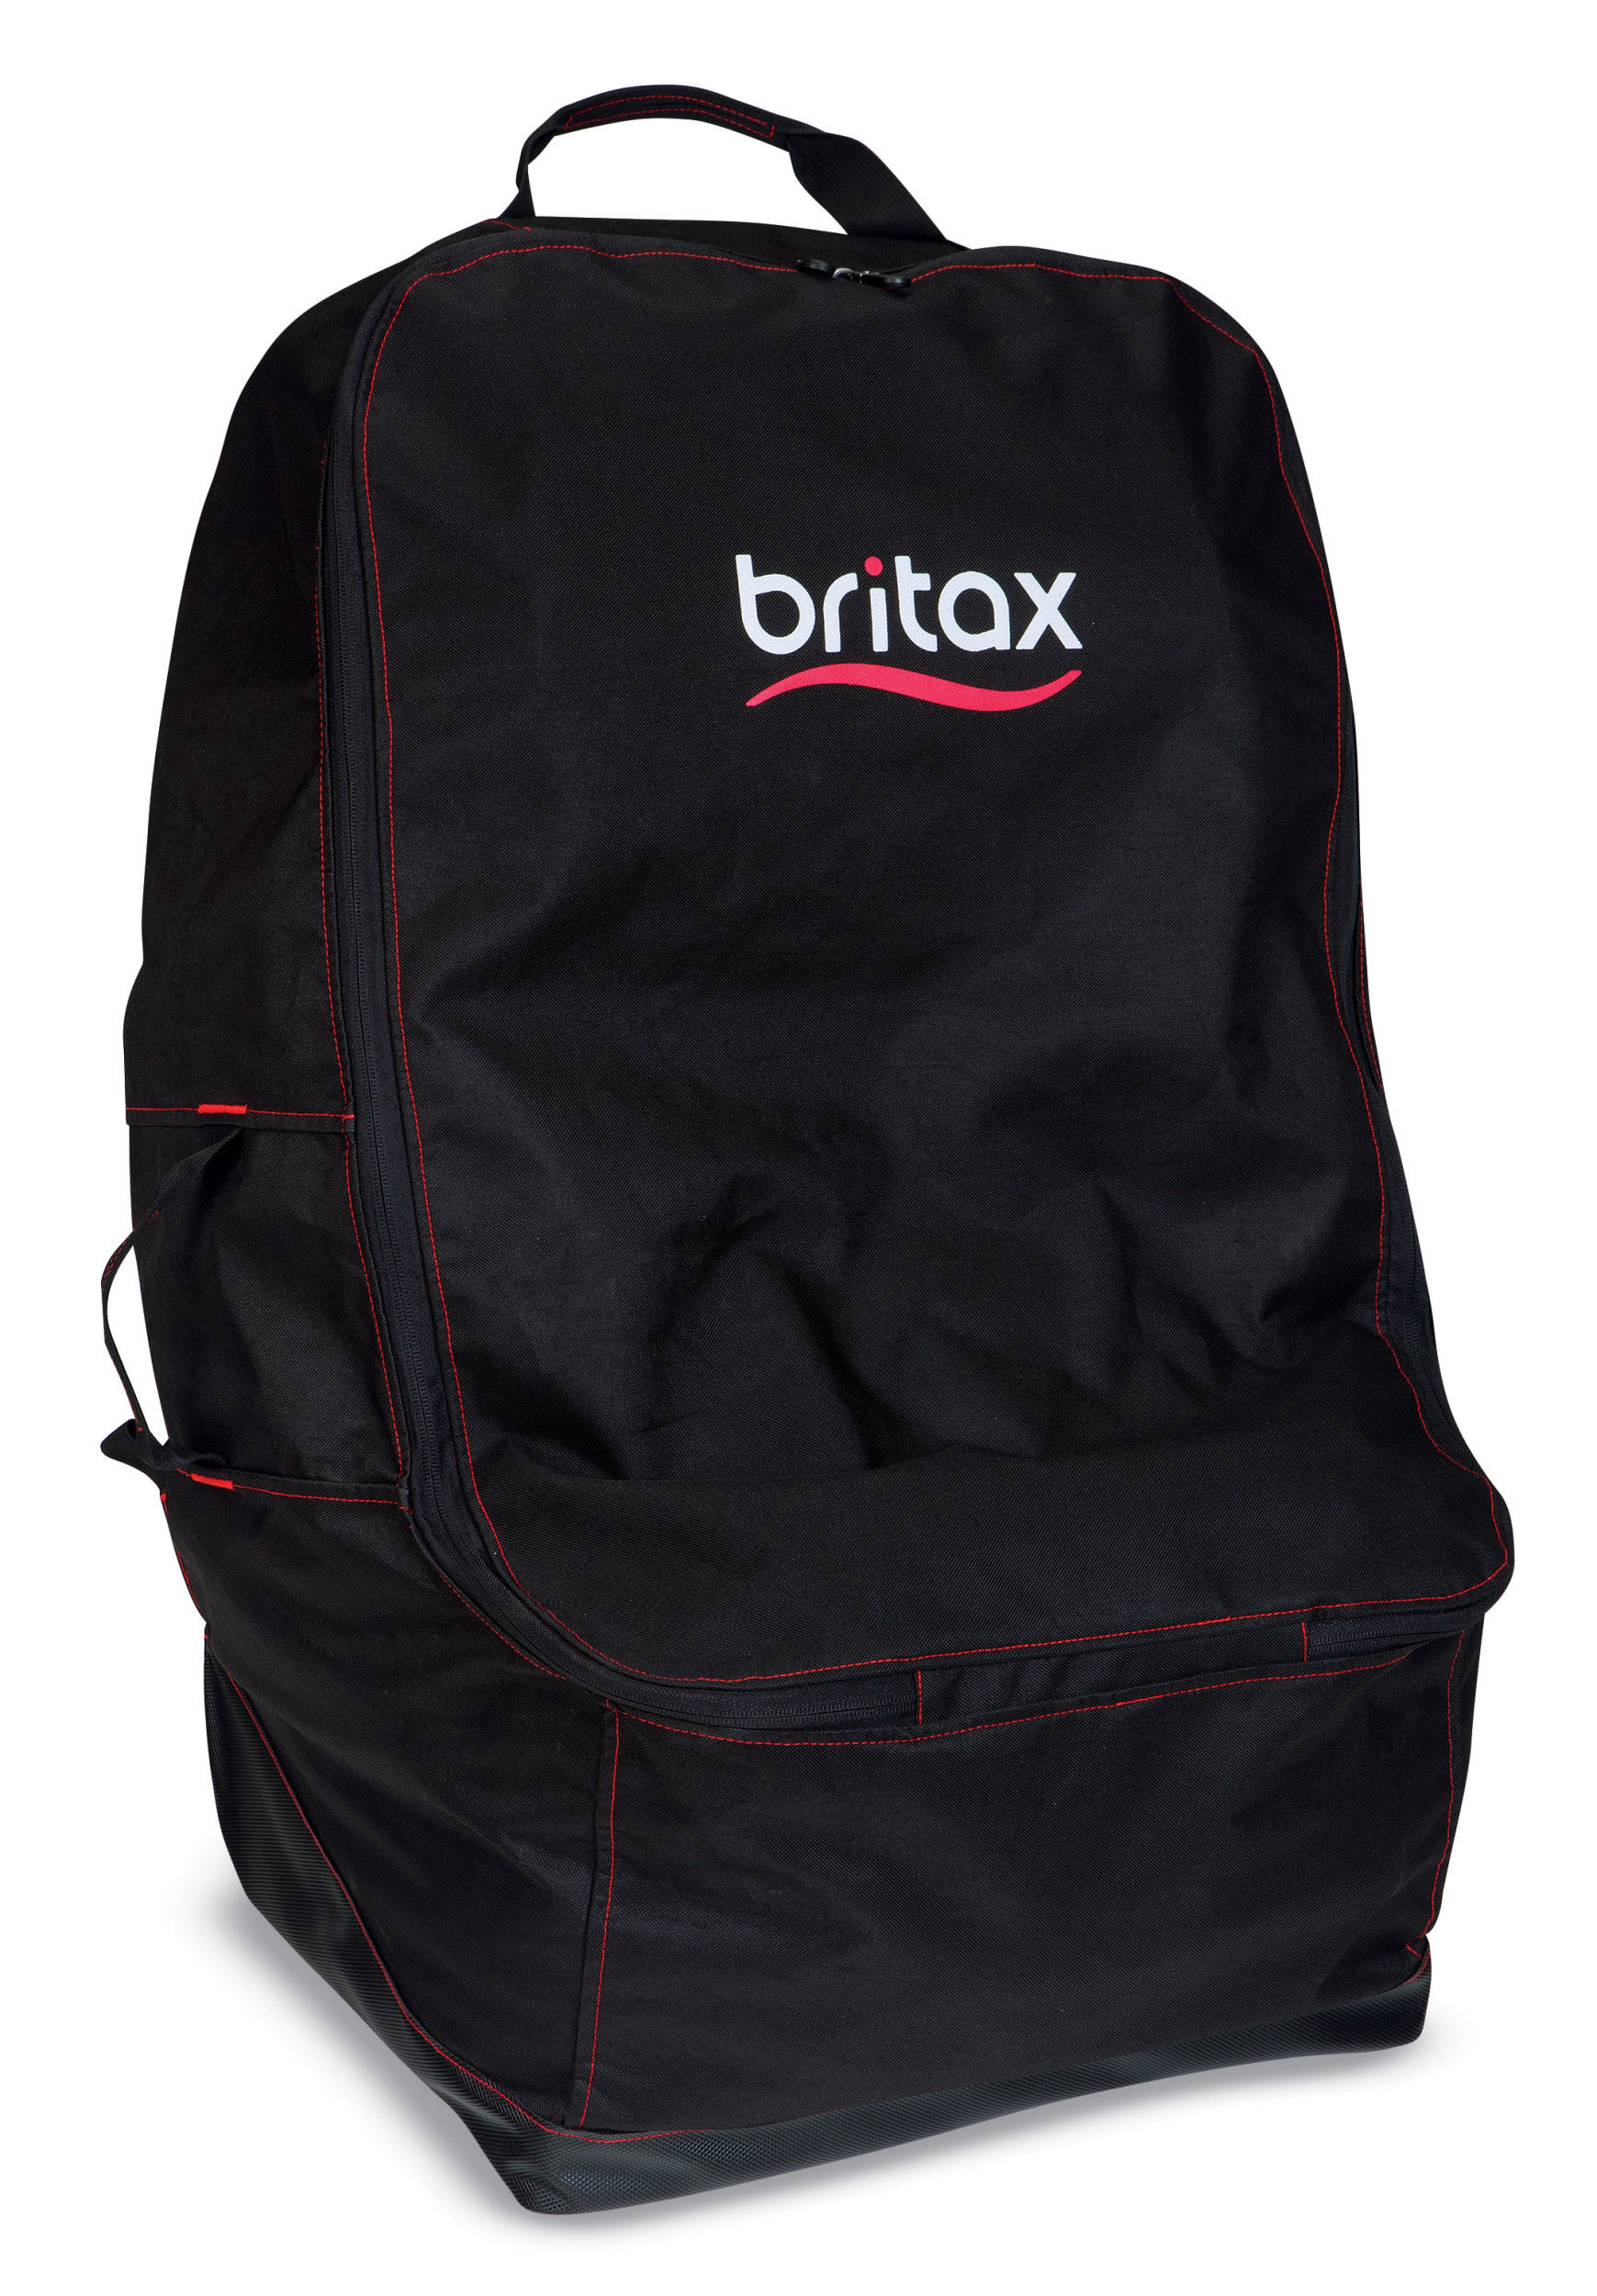 britax travel car seat bag